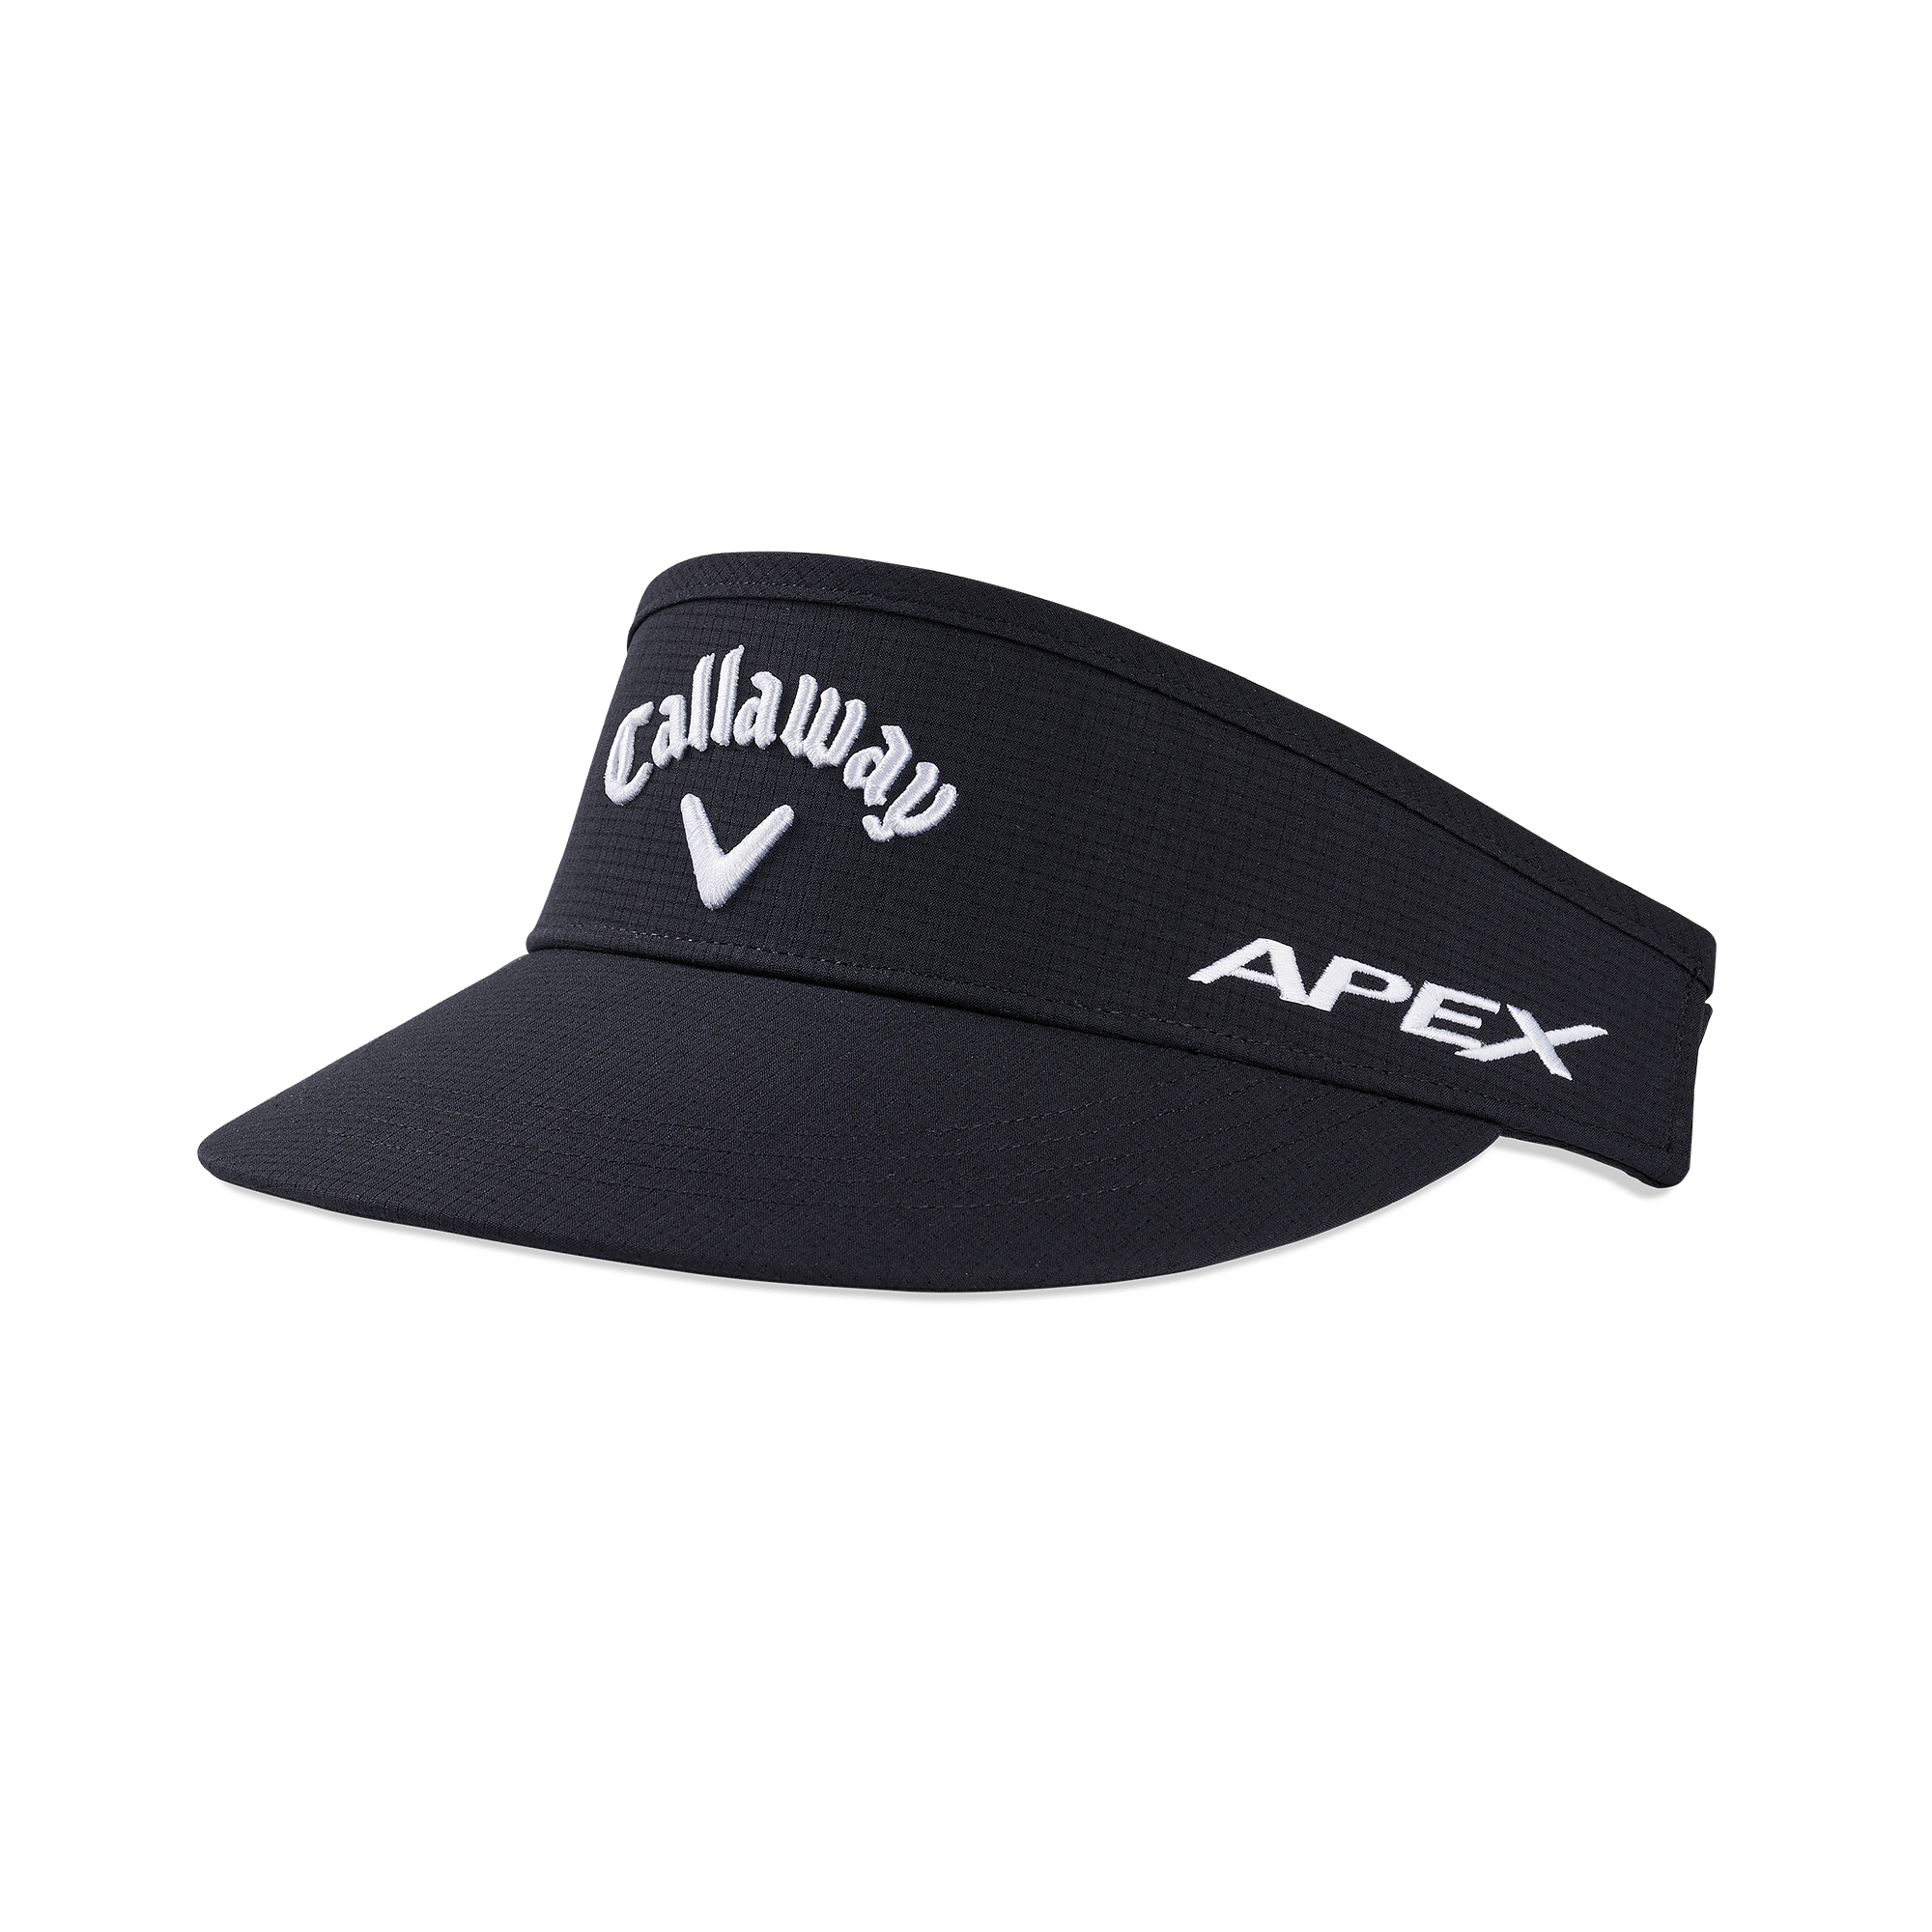 Heritage Gloves Logo Sports Cap Black Adjustable Adult Size New Free Shipping 